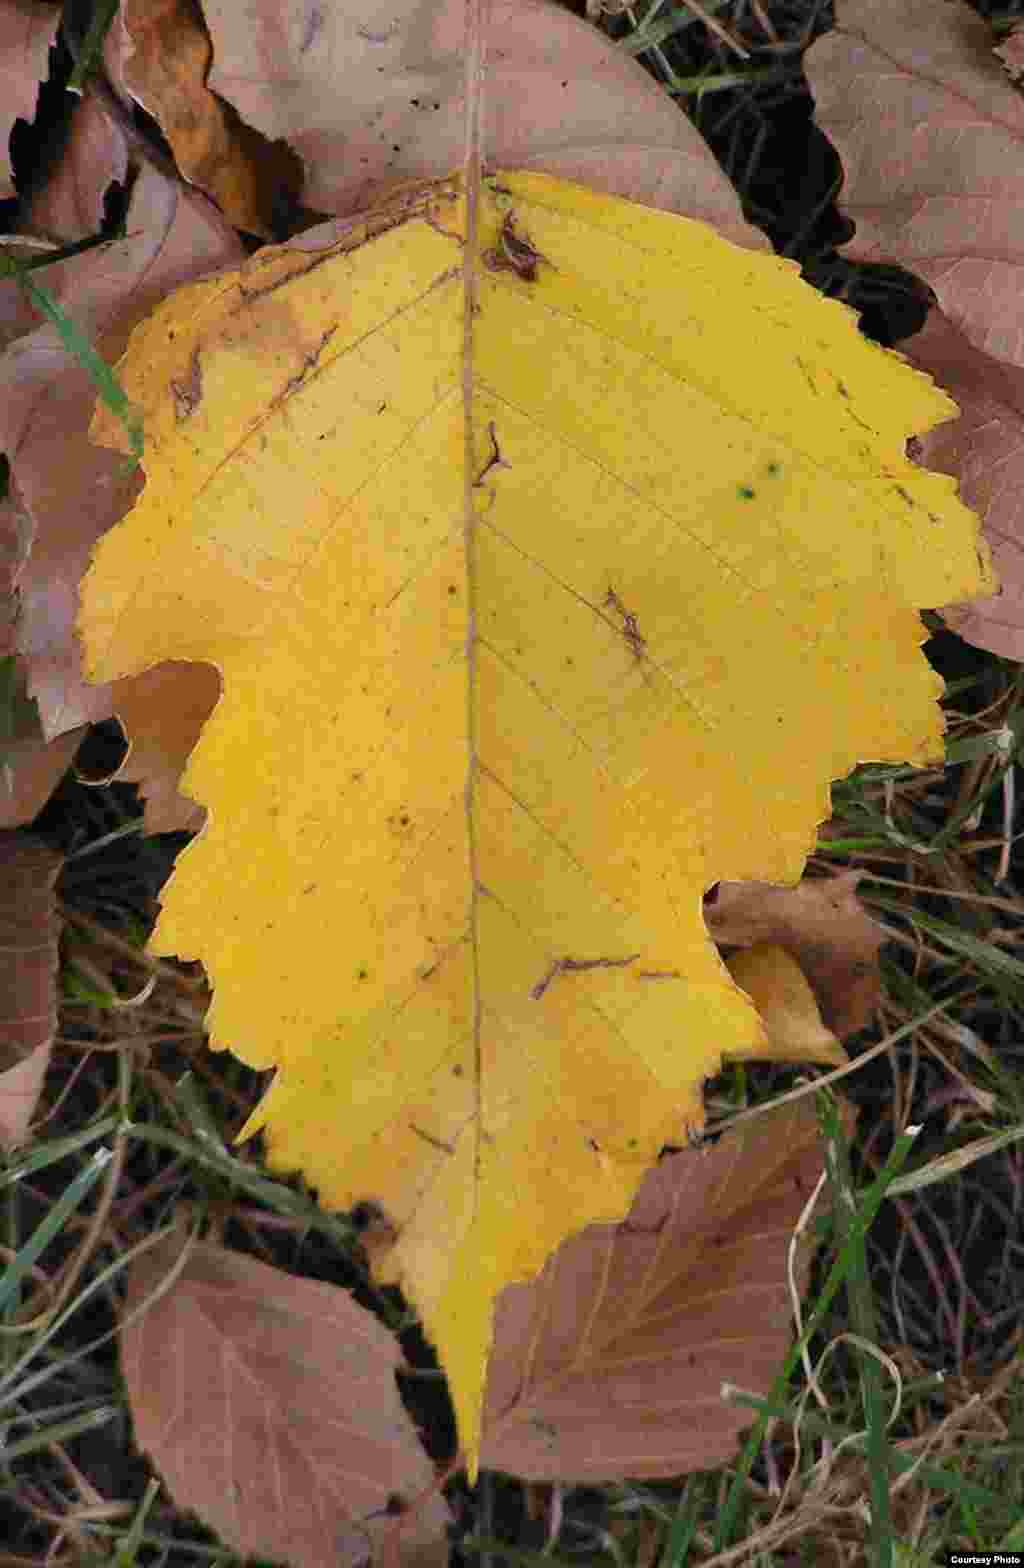 A birch leaf turns a bright yellow as winter approaches, Gateway Arch, St. Louis, Missouri. (Amy Zanne) 